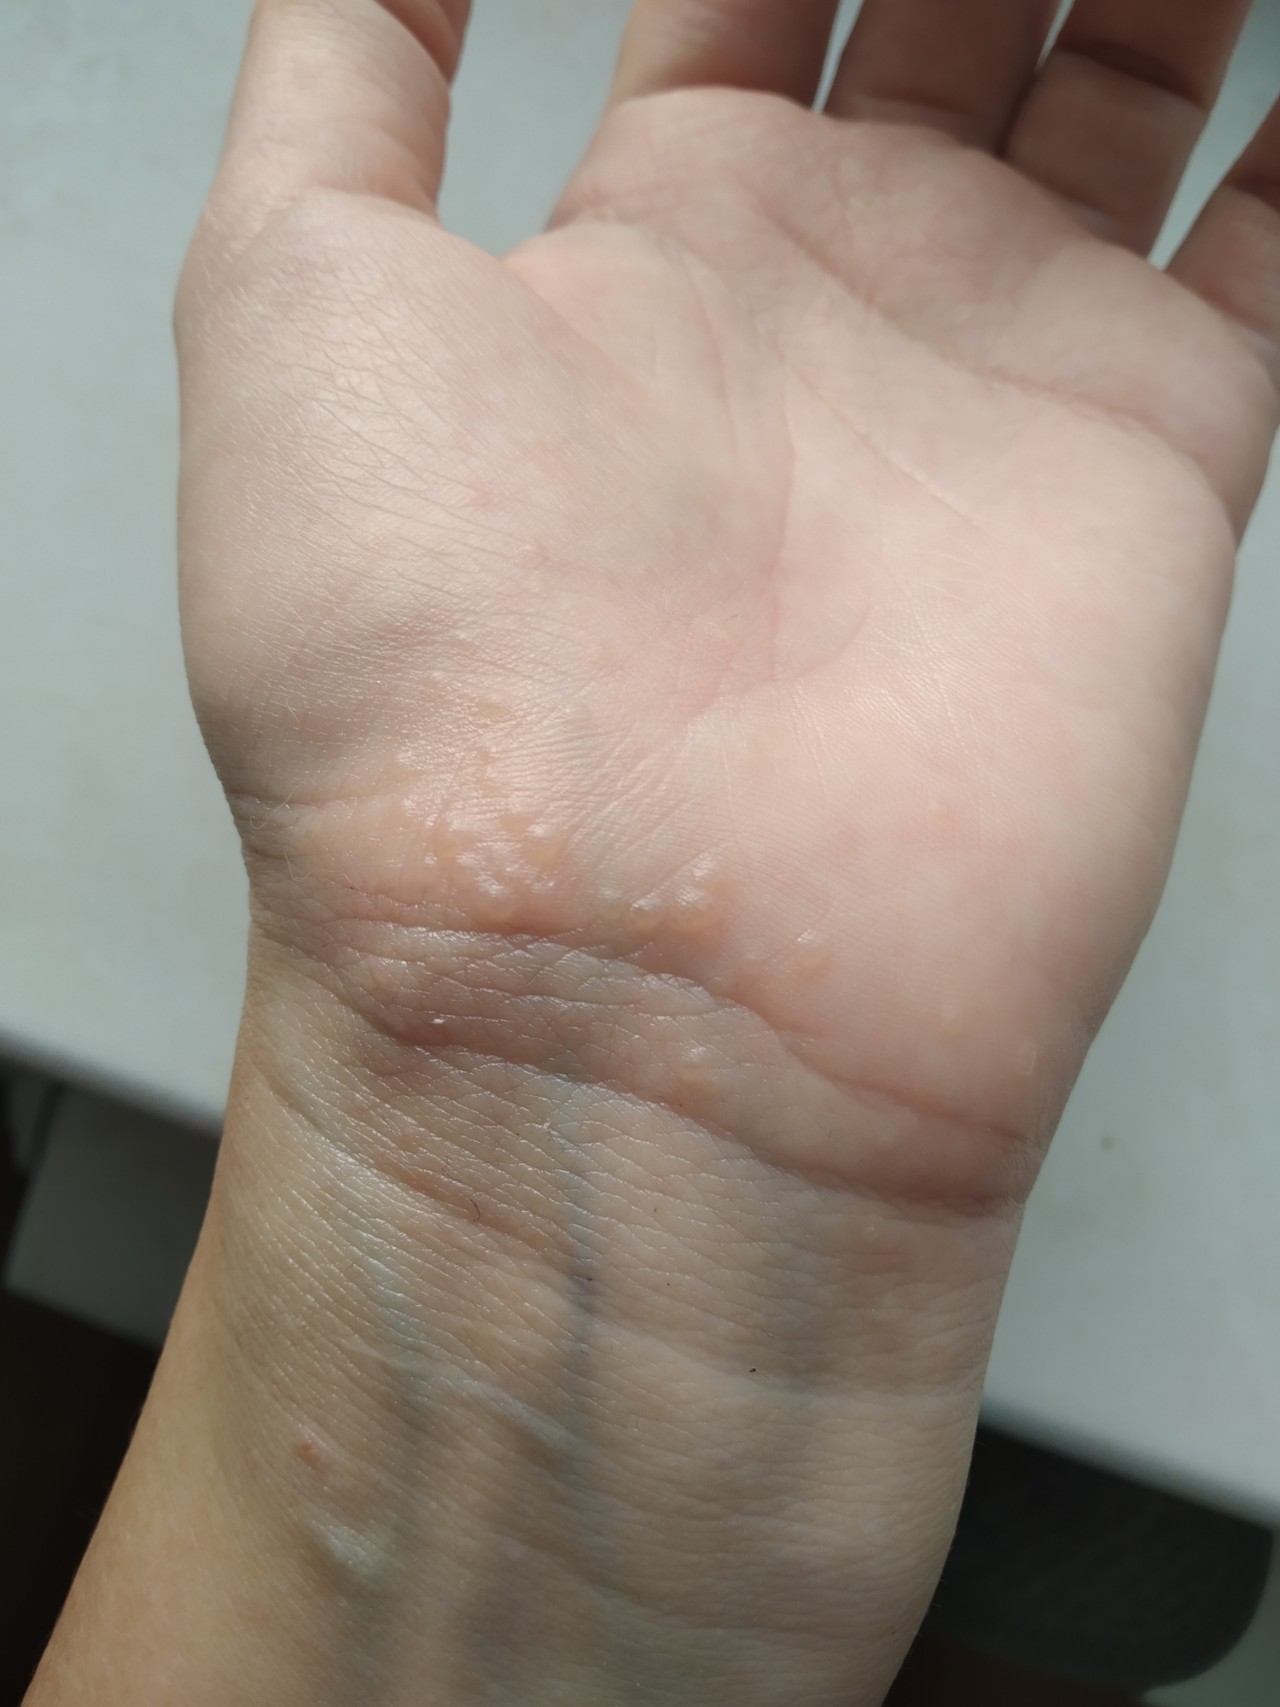 Грибок на коже рук симптомы фото